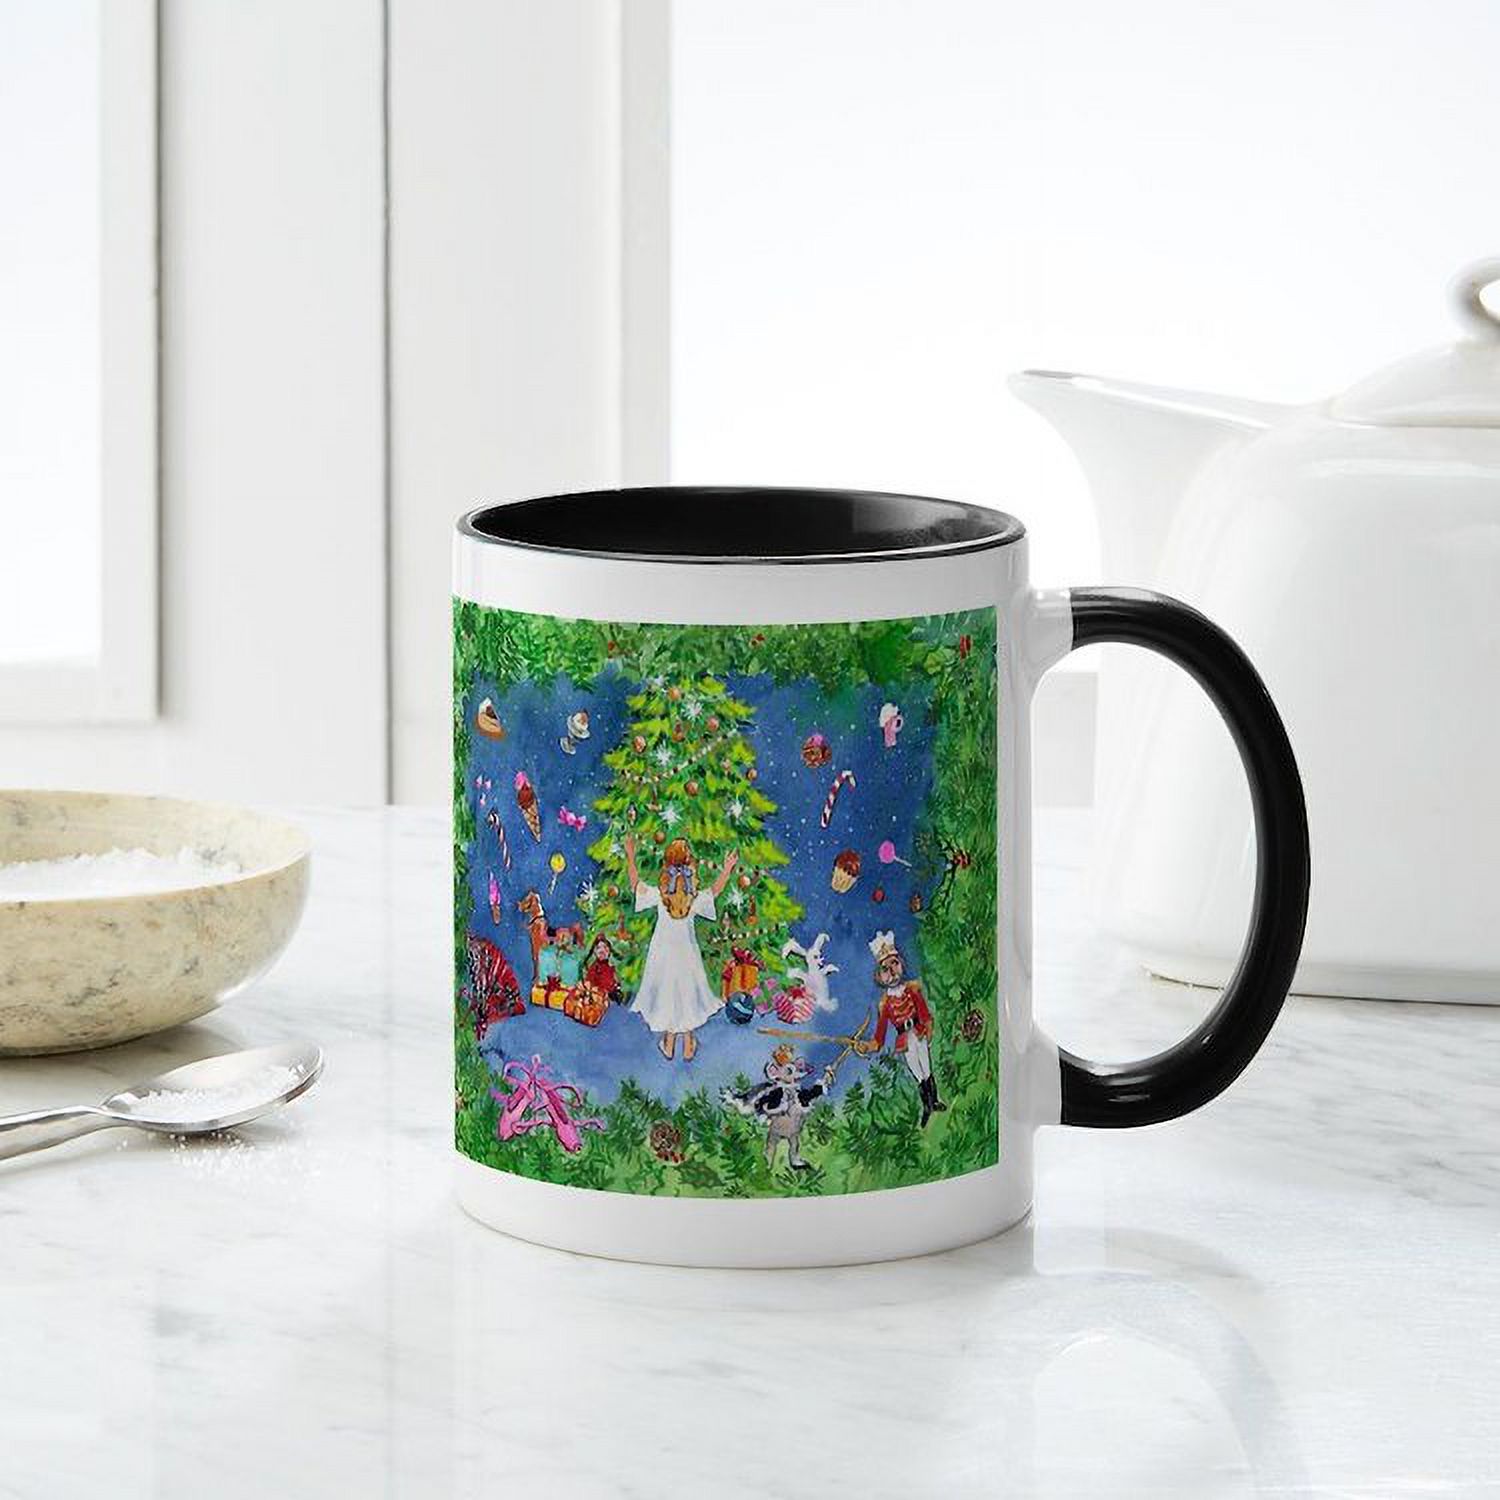 CafePress - Nutcracker Christmas Ballet Mug - 11 oz Ceramic Mug - Novelty Coffee Tea Cup - image 4 of 4